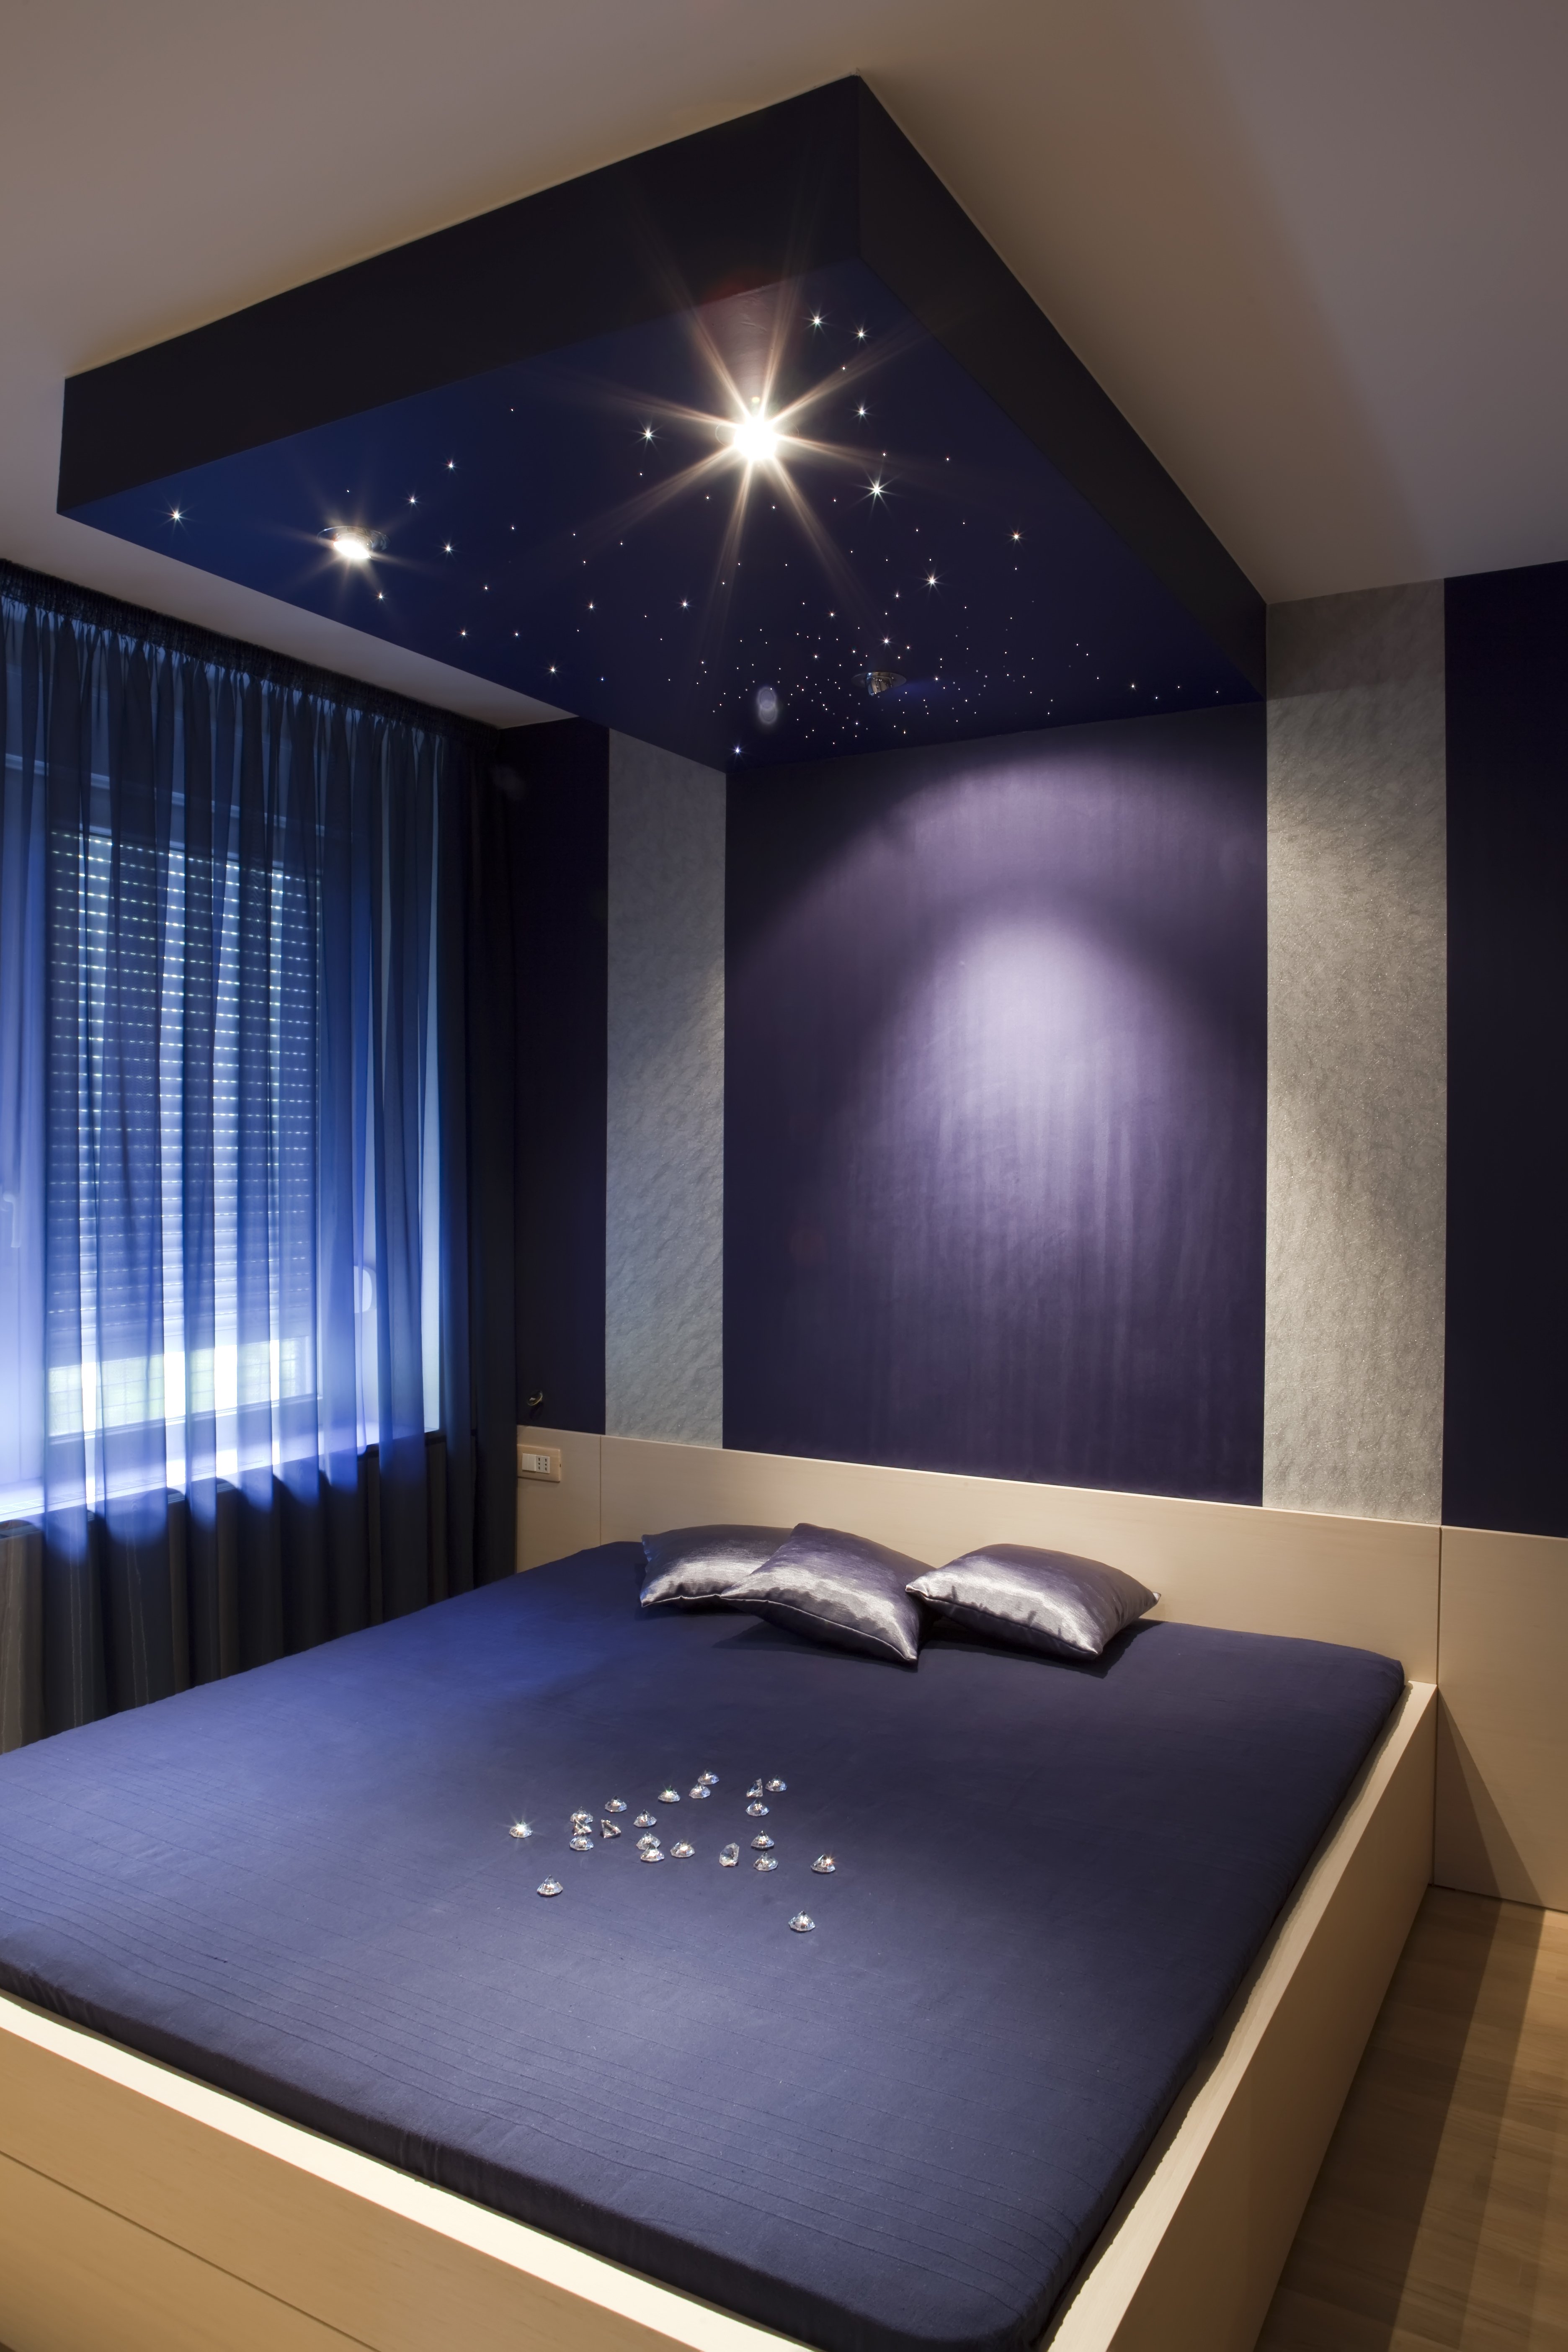 2021 False Ceiling Designs For Bedroom - HomeLane Blog